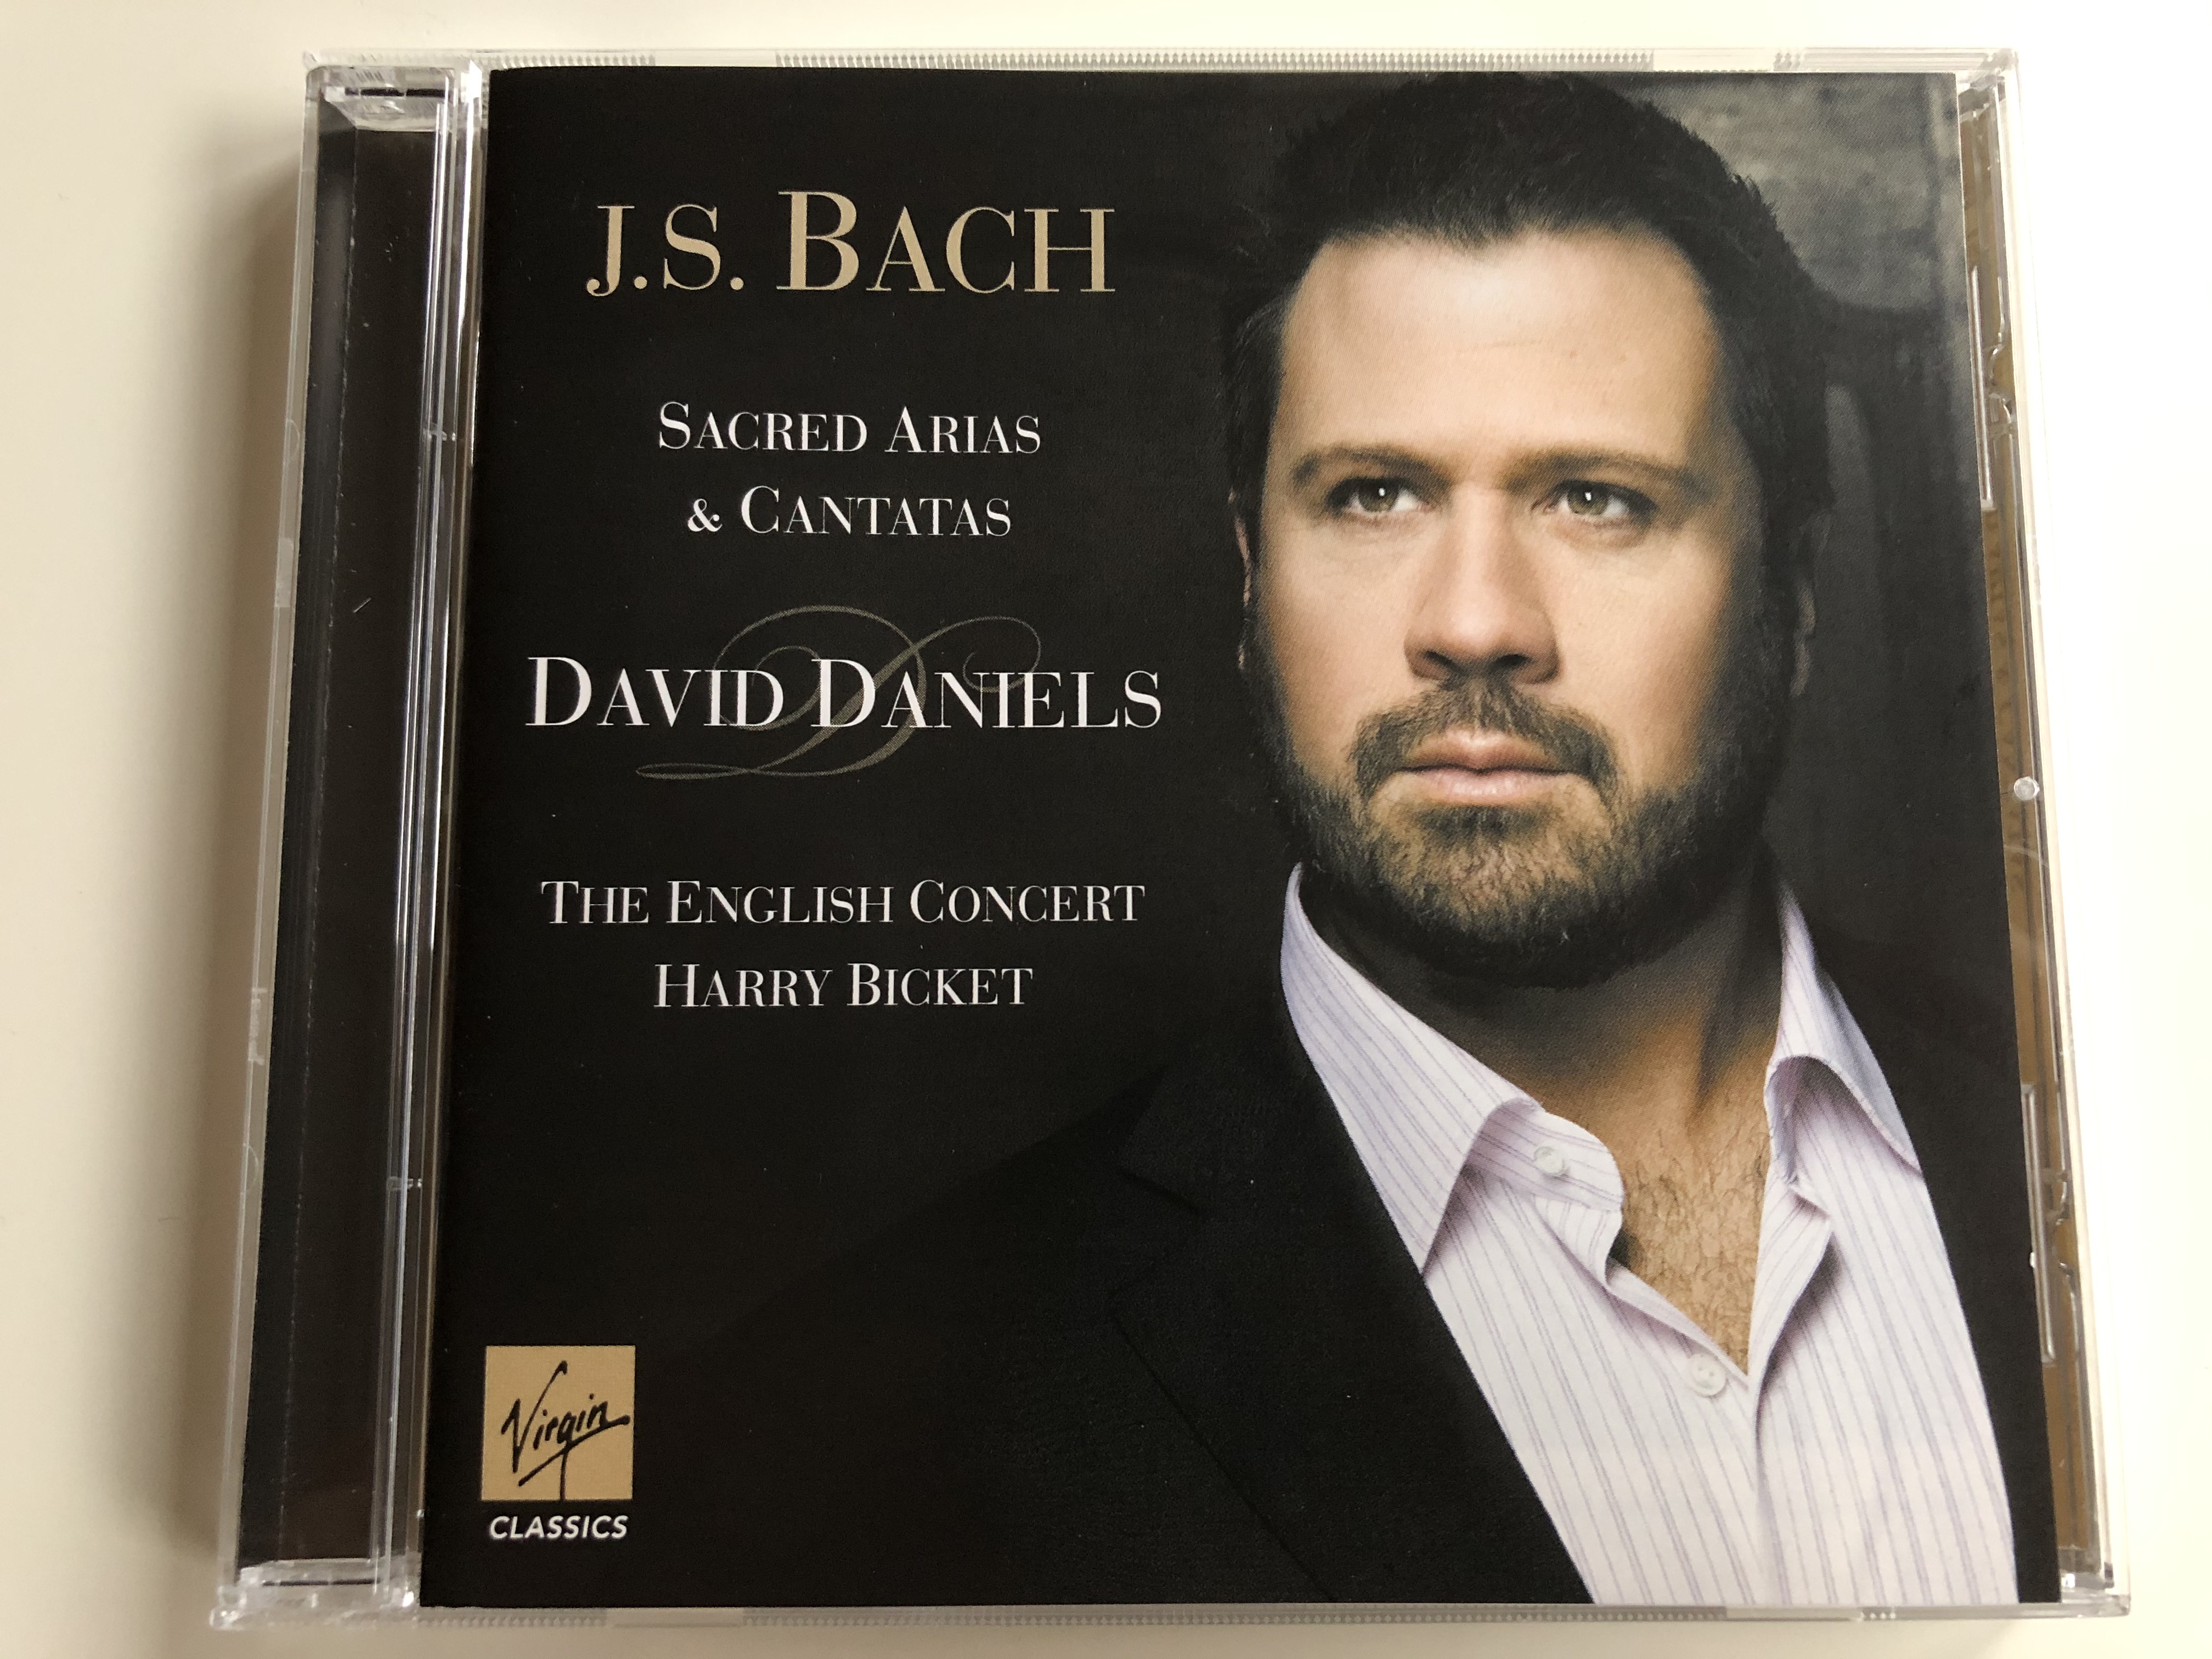 j.s.-bach-sacred-arias-cantatas-david-daniels-the-english-concert-harry-bicket-virgin-classics-audio-cd-2008-stereo-50999-519037-2-5-1-.jpg